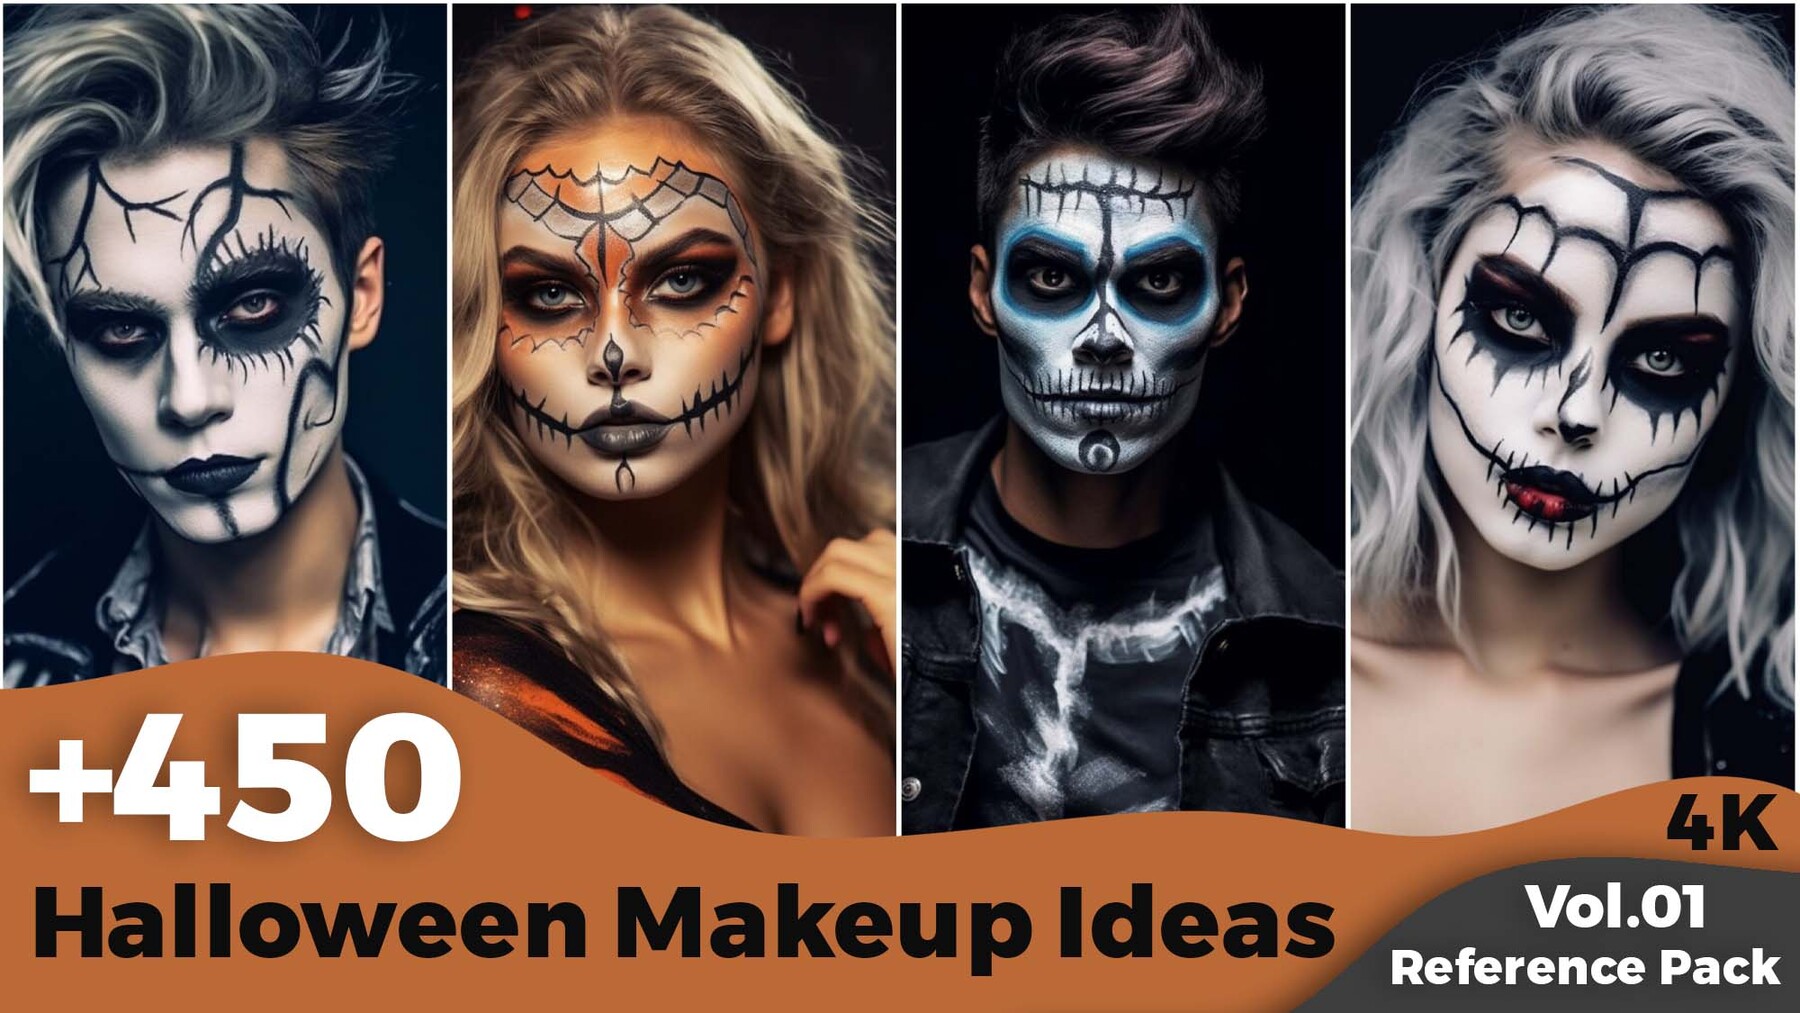 ArtStation - +450 Halloween Makeup Ideas (4k) | Artworks